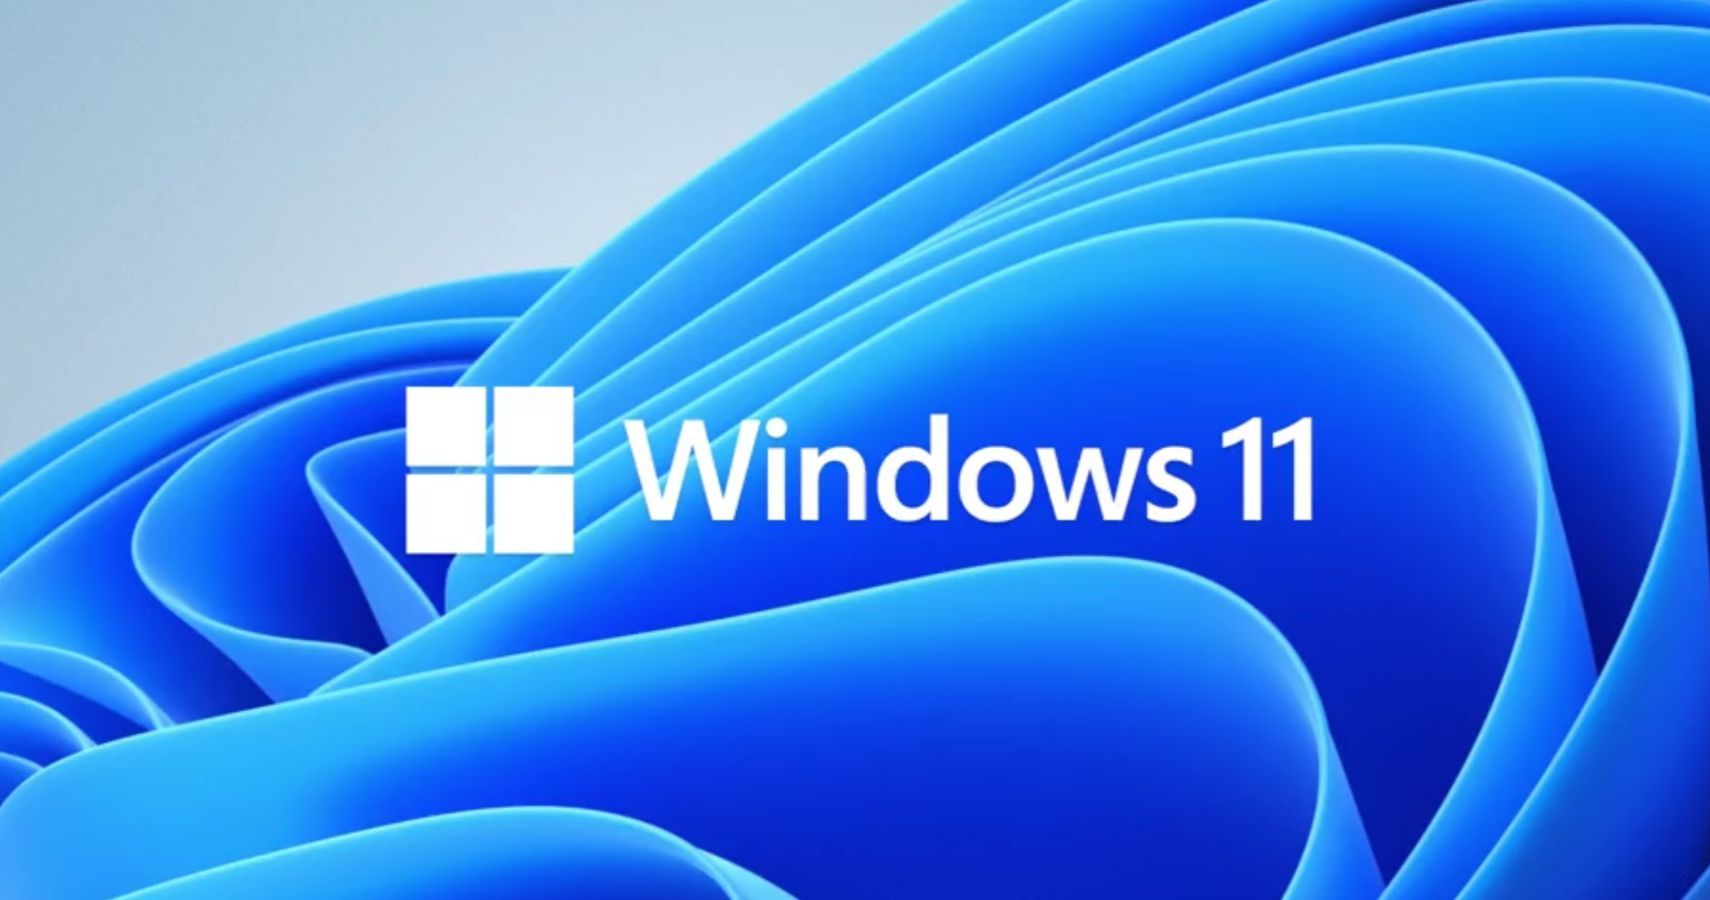 will windows 11 be free upgrade